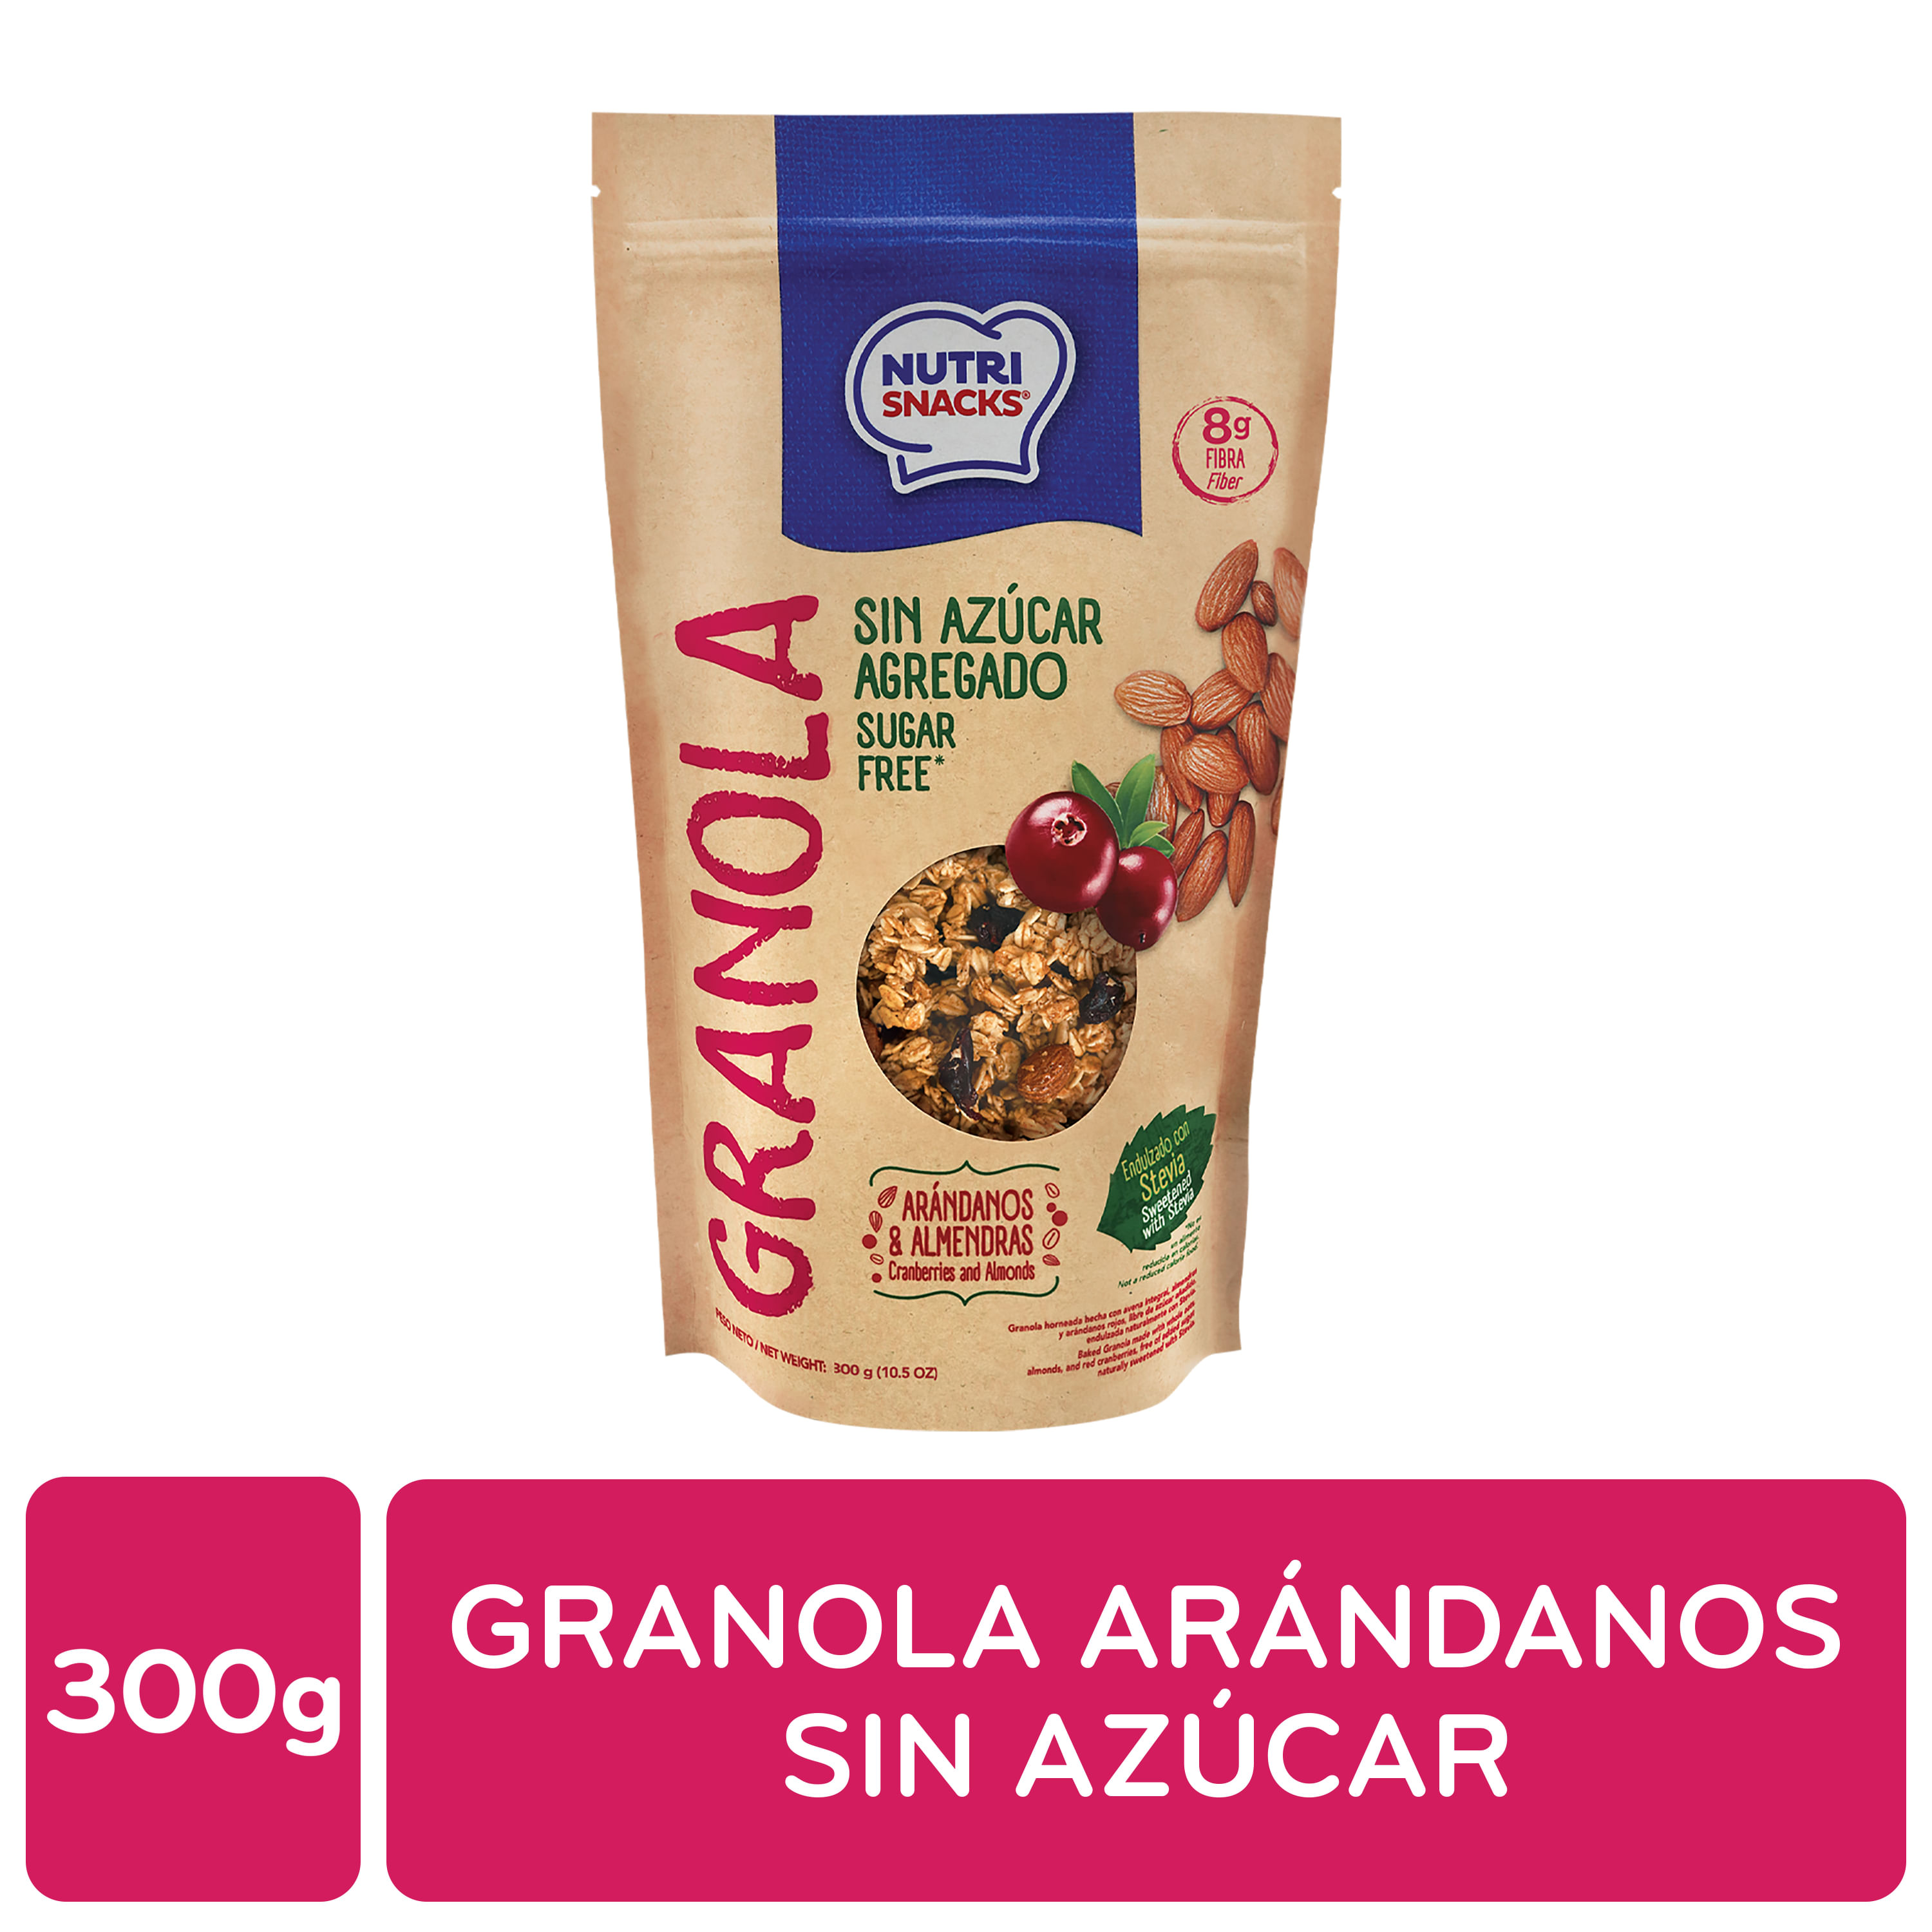 Granola-Nutrisnacks-Sin-Az-car-Ar-ndanos-Y-Almendras-300gr-1-28090